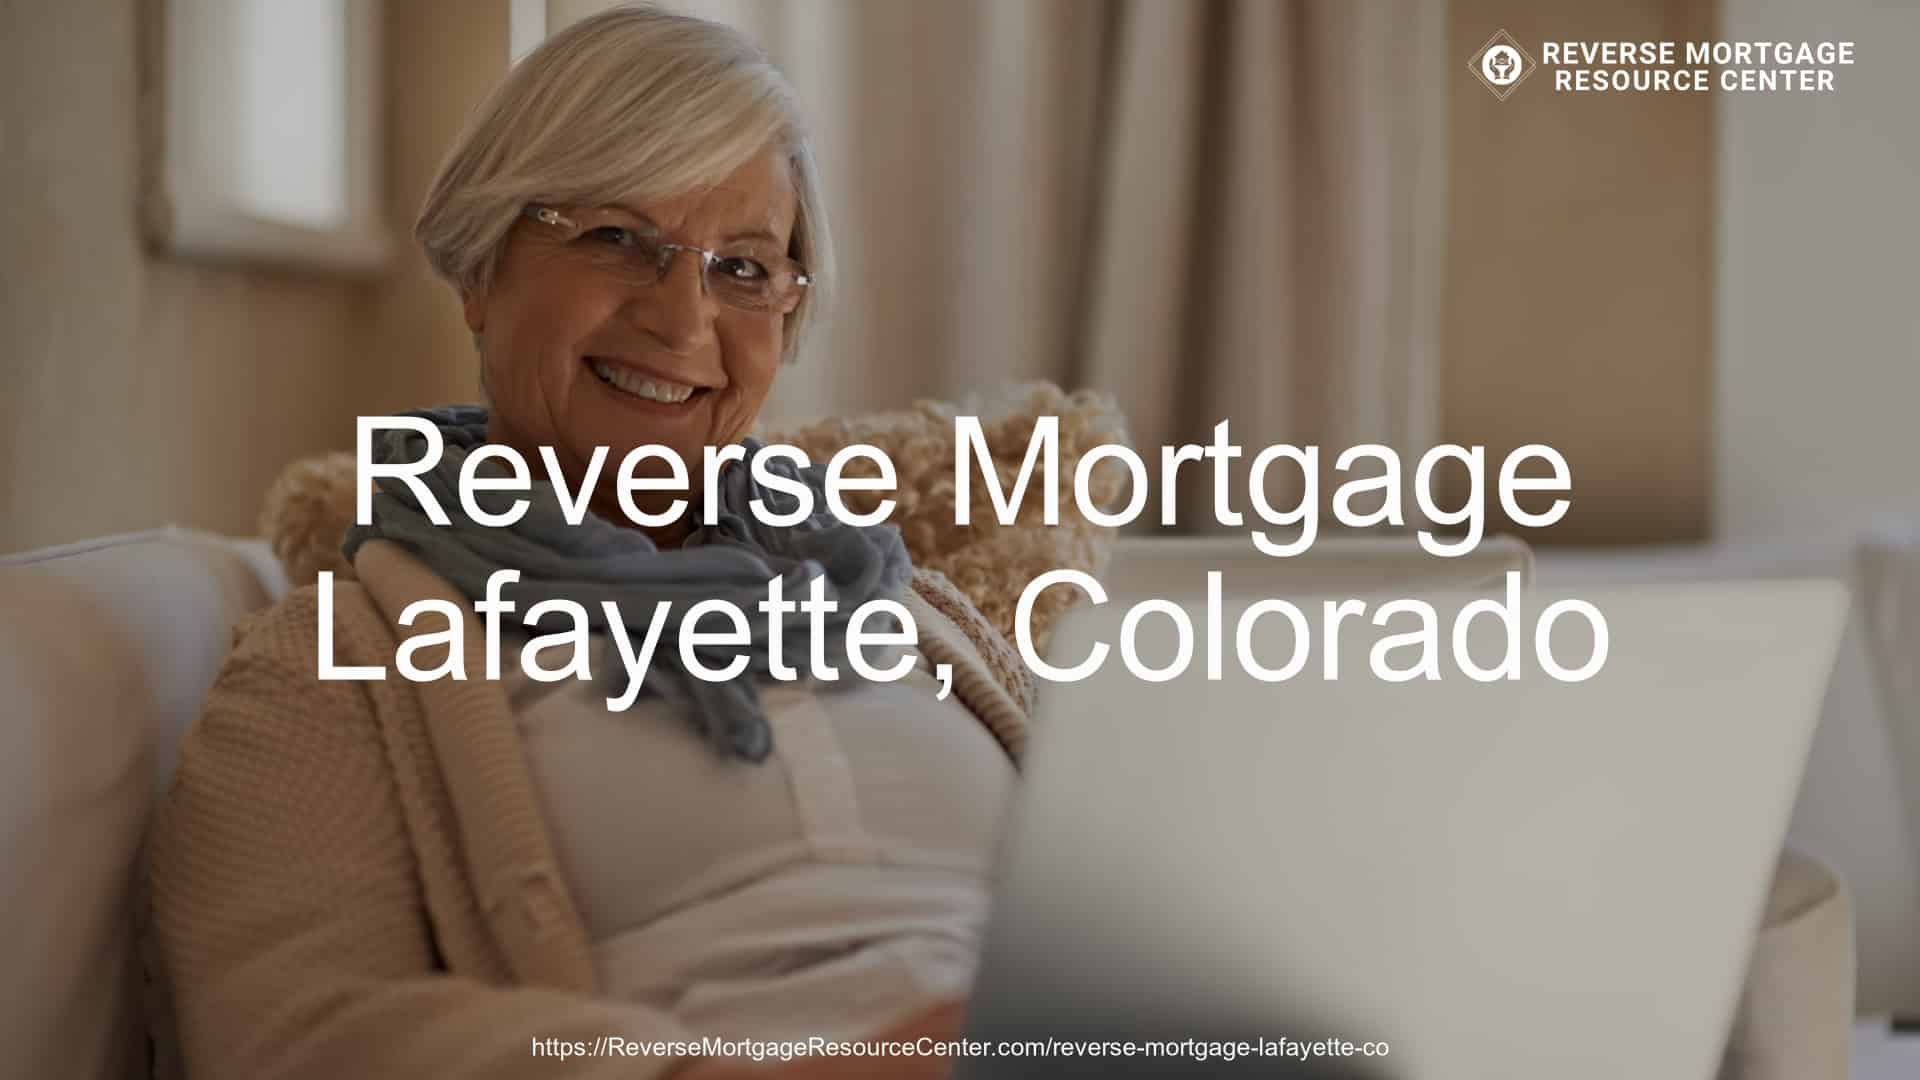 Reverse Mortgage Loans in Lafayette Colorado